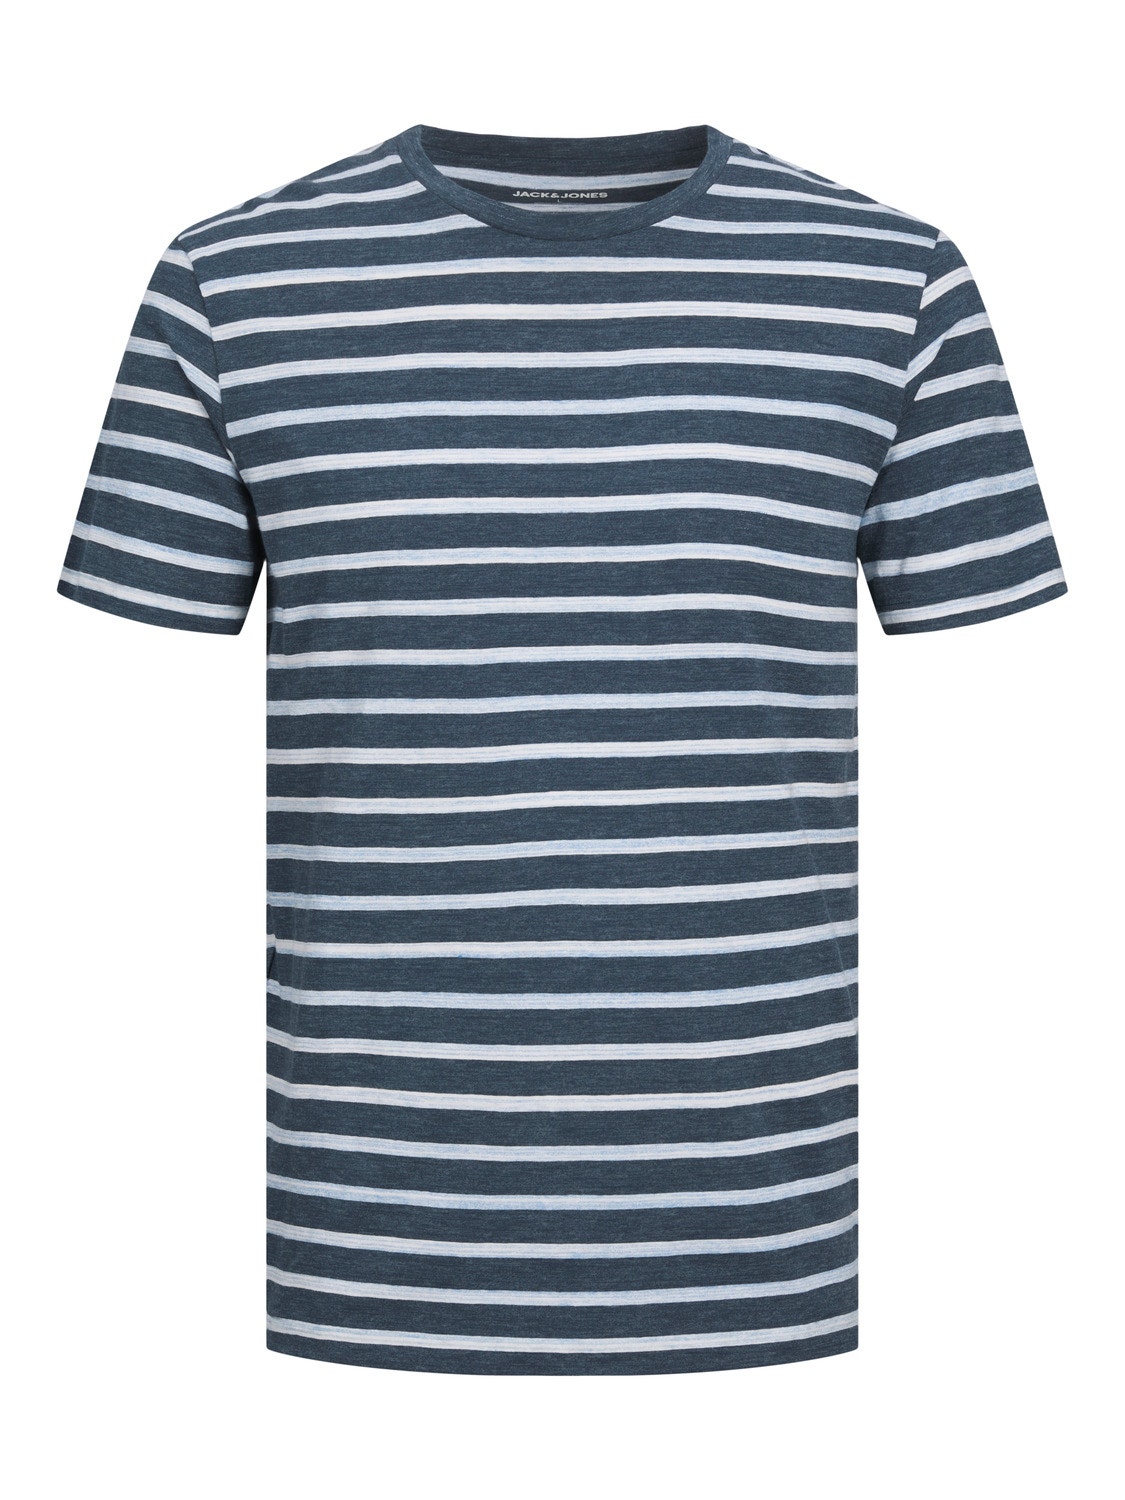 Striped Crew neck T-shirt with 20% discount! | Jack & Jones®